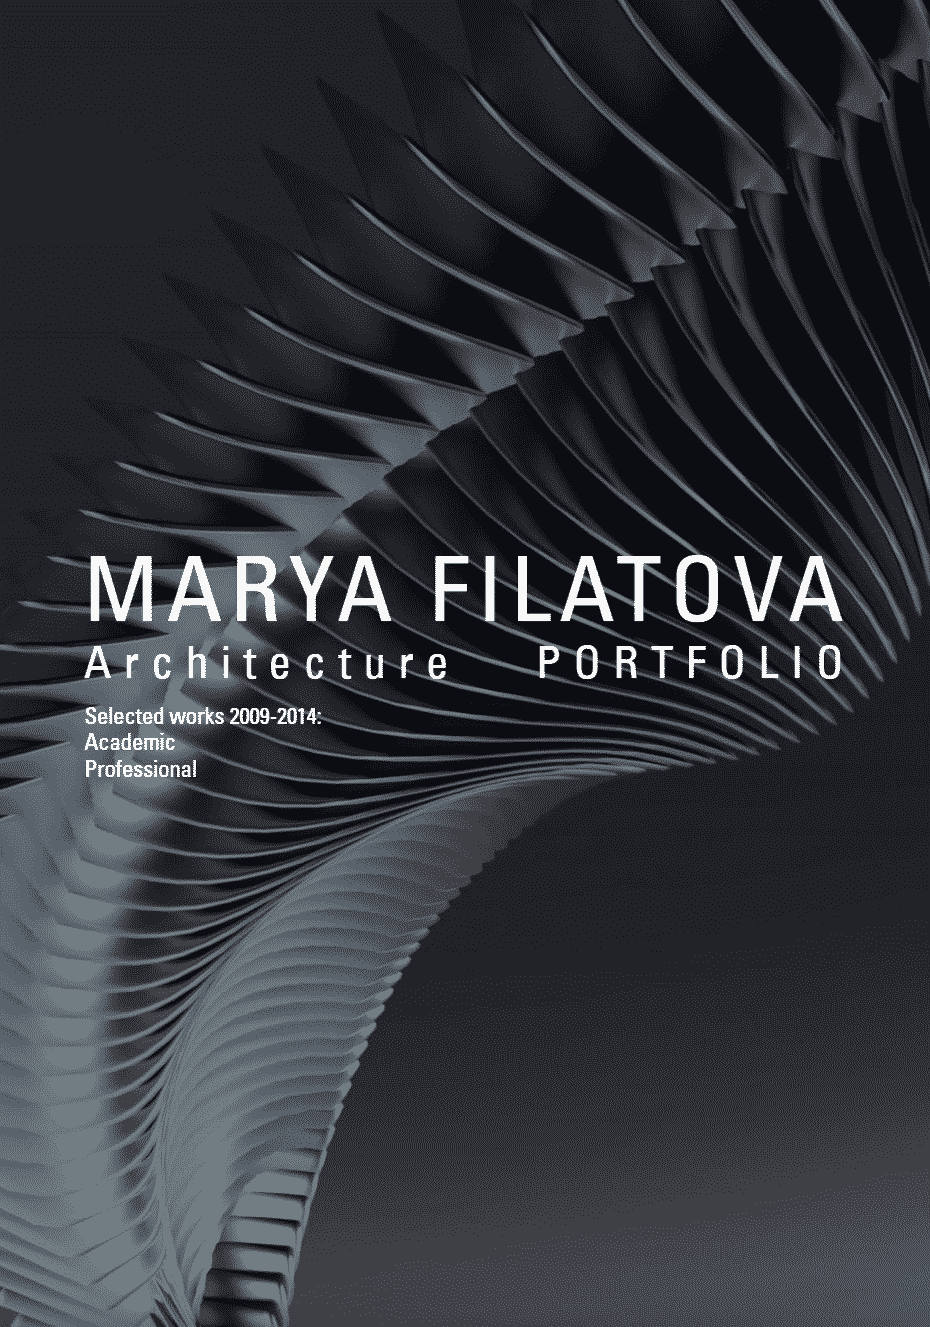 © marya filatova architecture portfolio design cover (4)